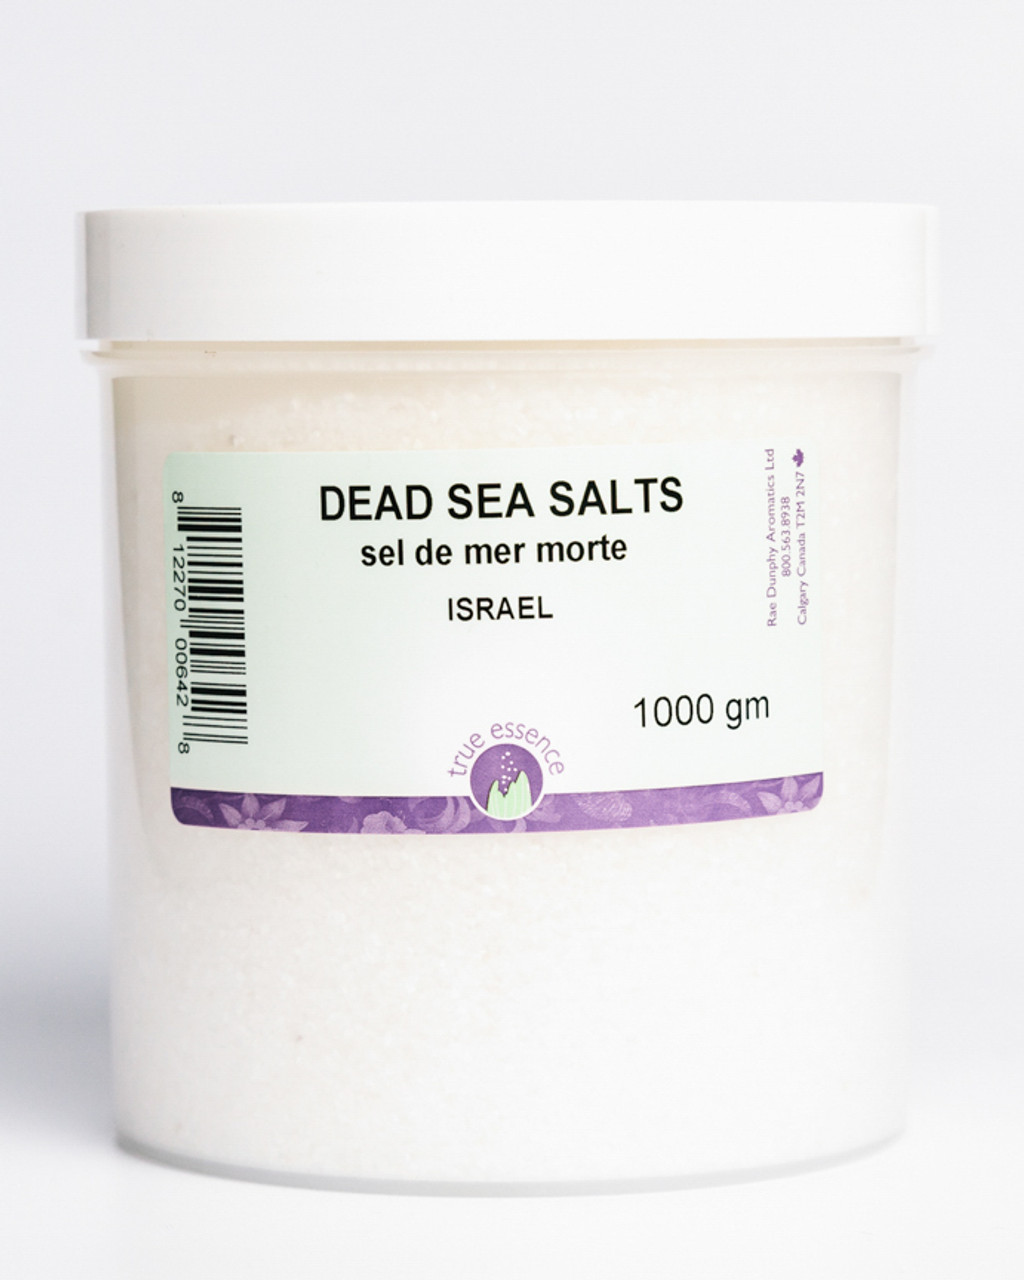 DEAD SEA SALTS